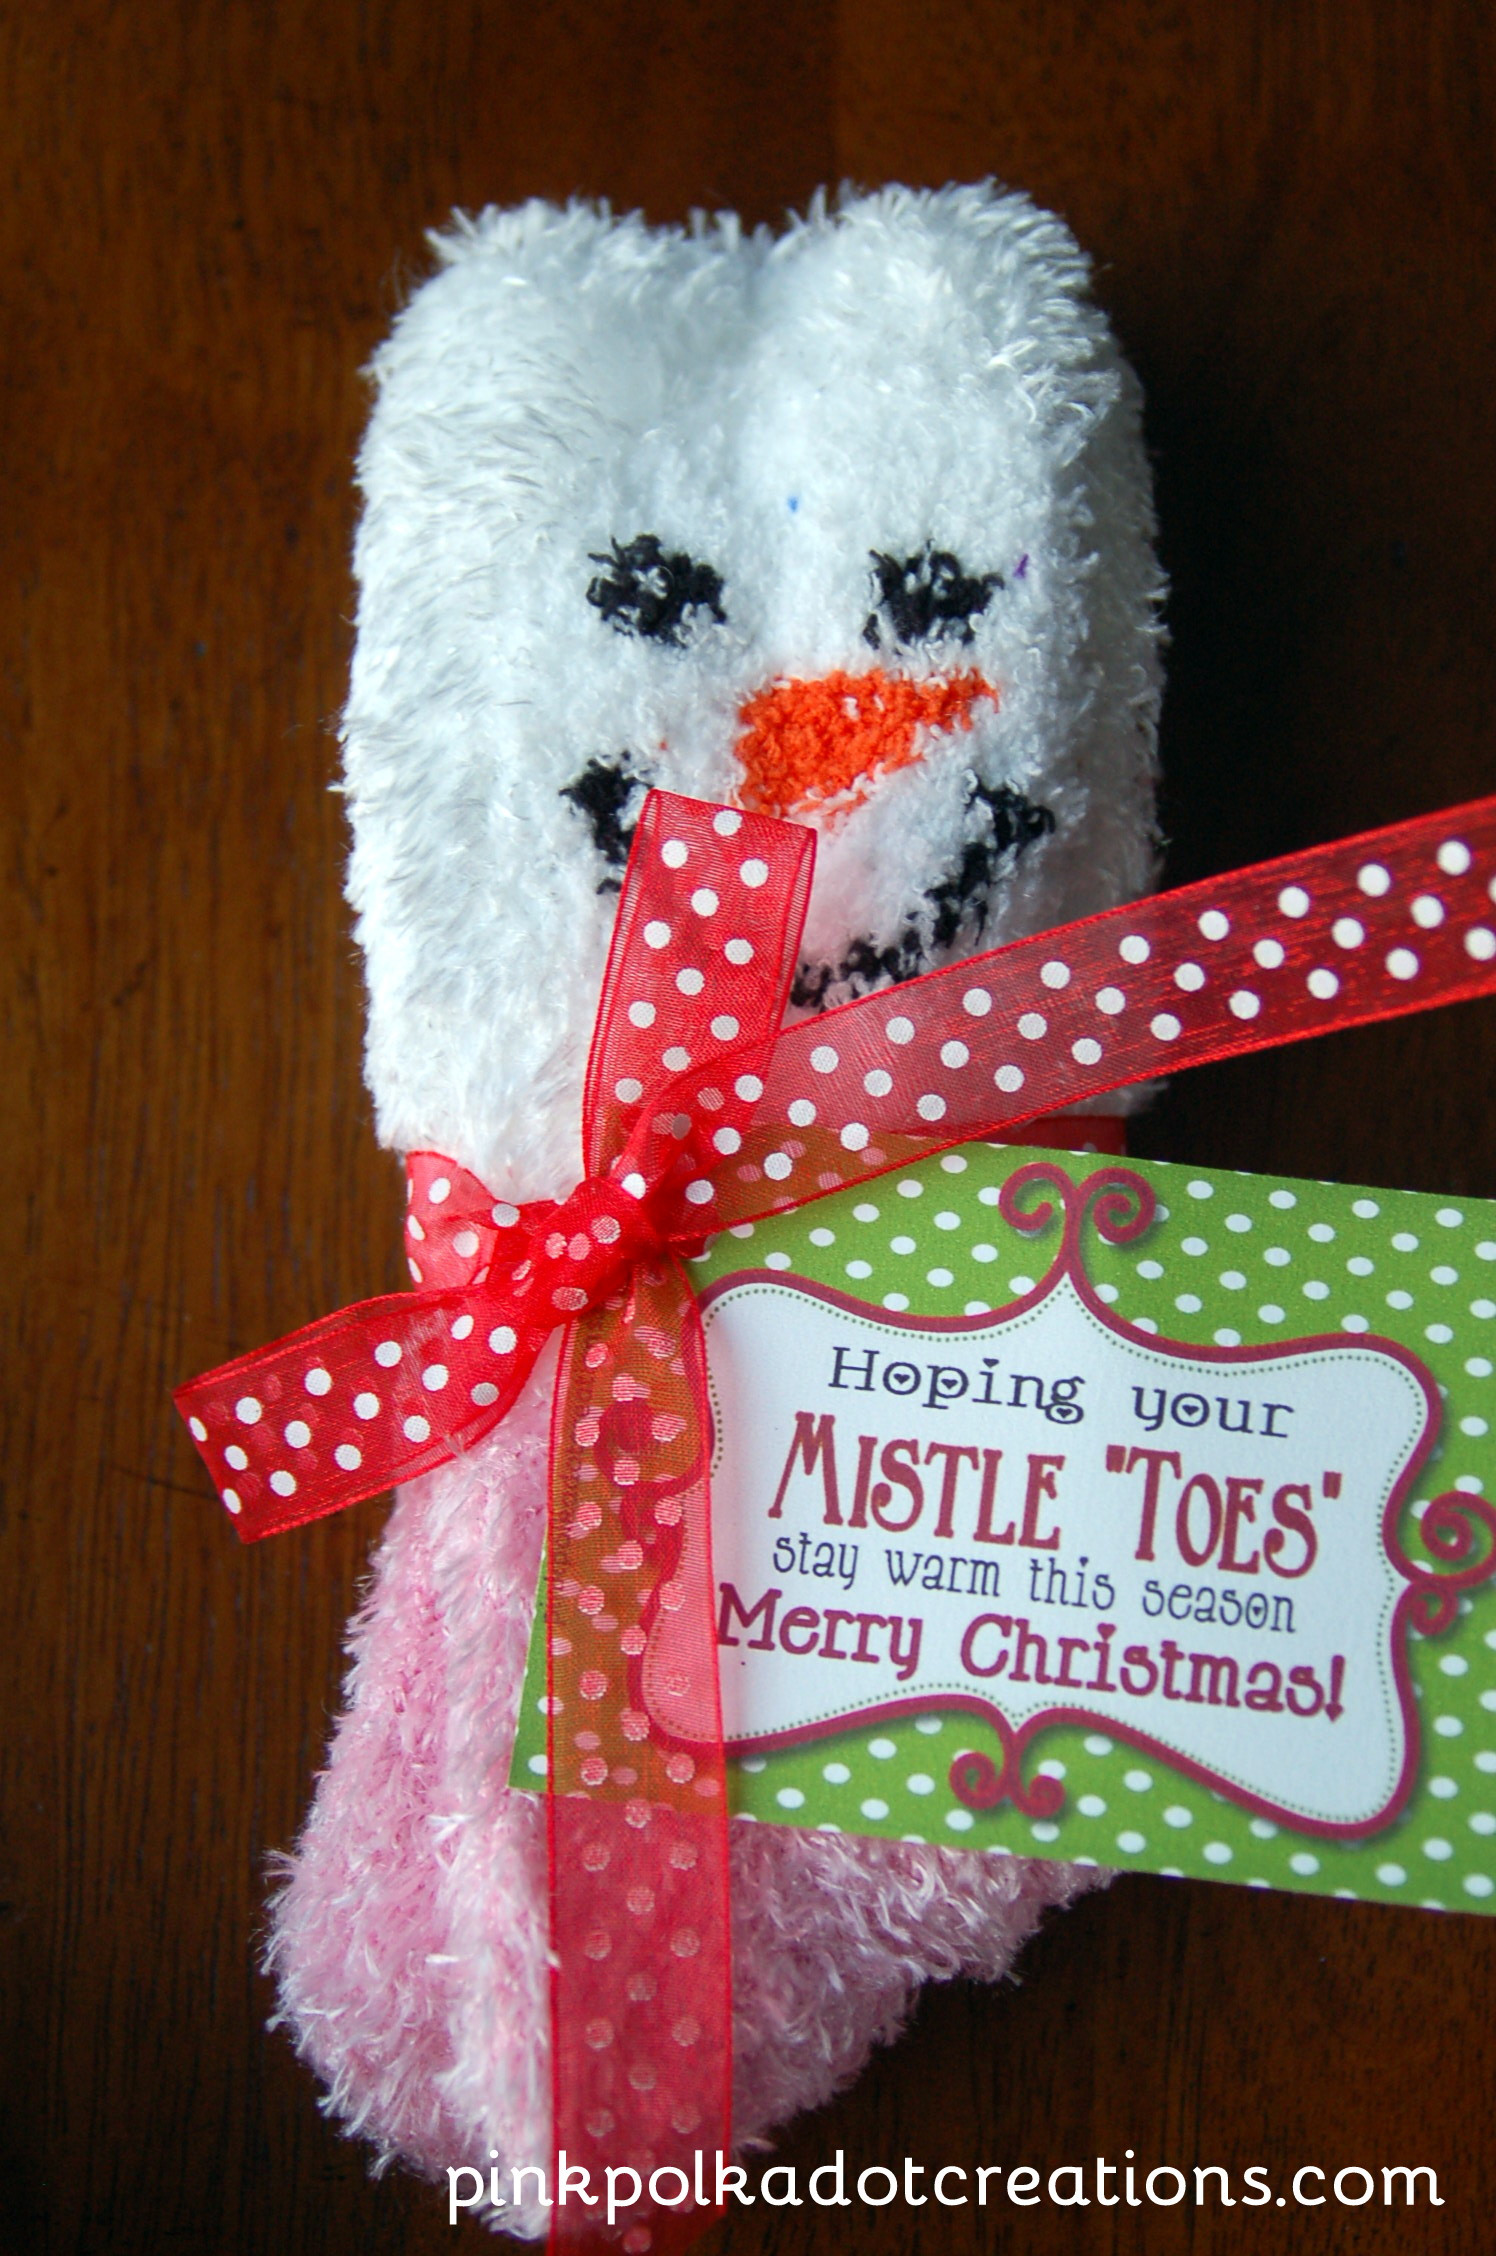 Christmas Socks Gift Ideas
 Mistle"toes" Gift Idea Pink Polka Dot Creations